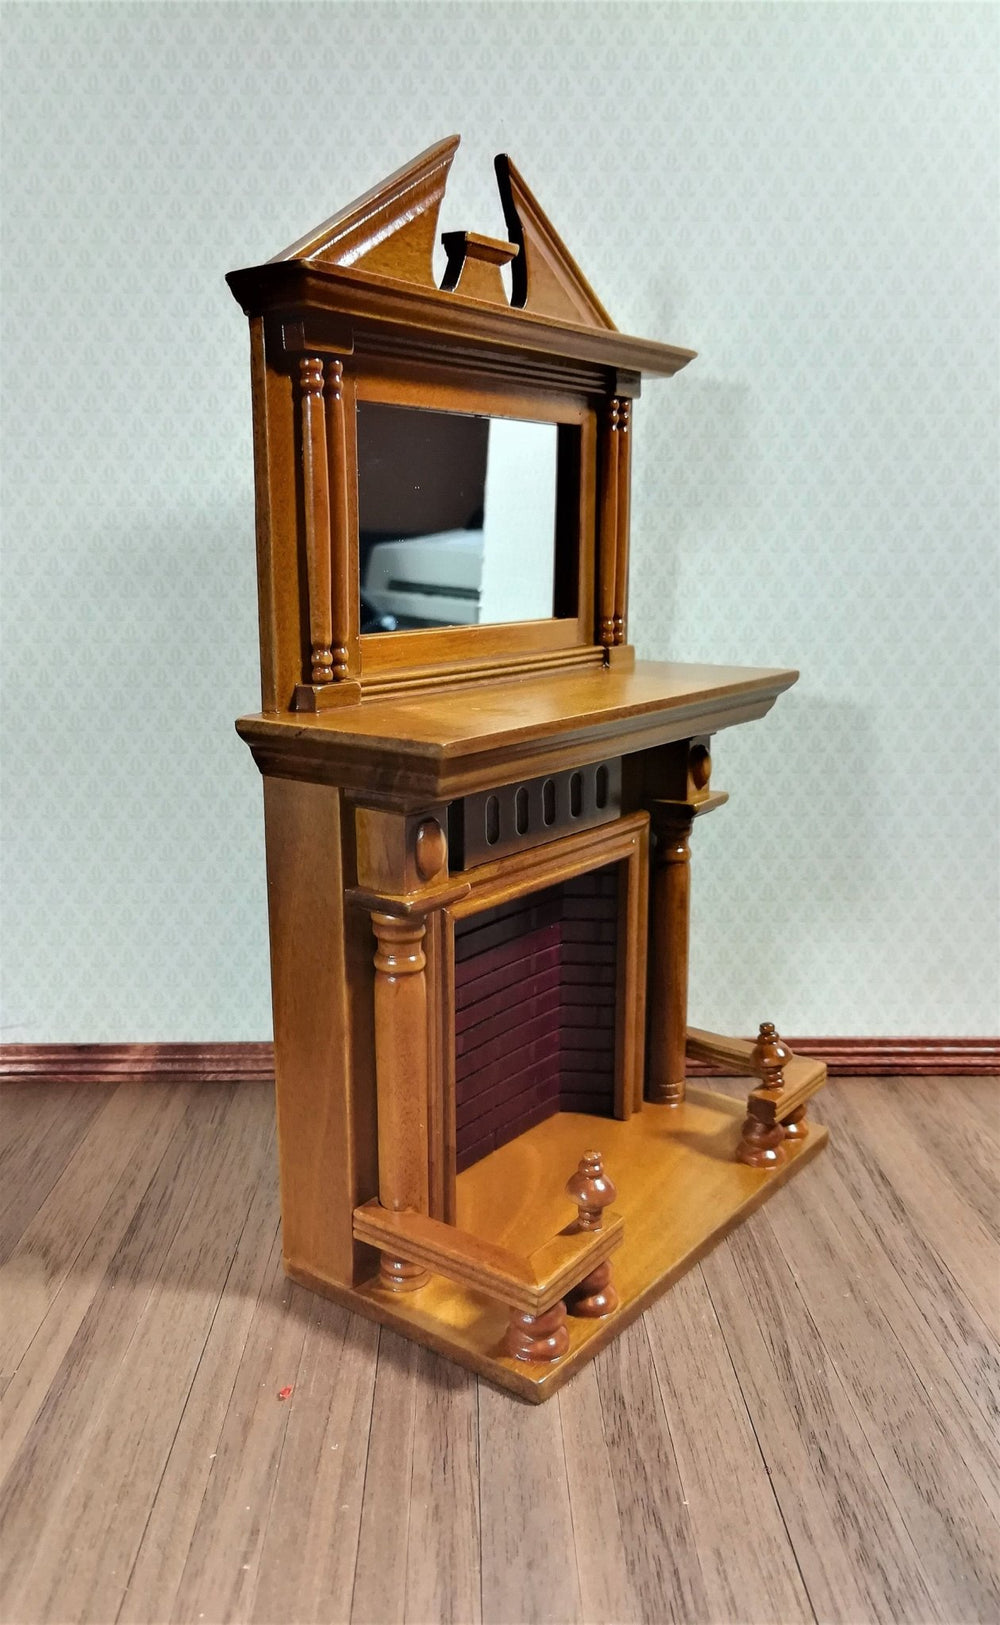 Dollhouse Fireplace Large with Square Mirror Walnut Finish 1:12 Scale Miniature Furniture - Miniature Crush